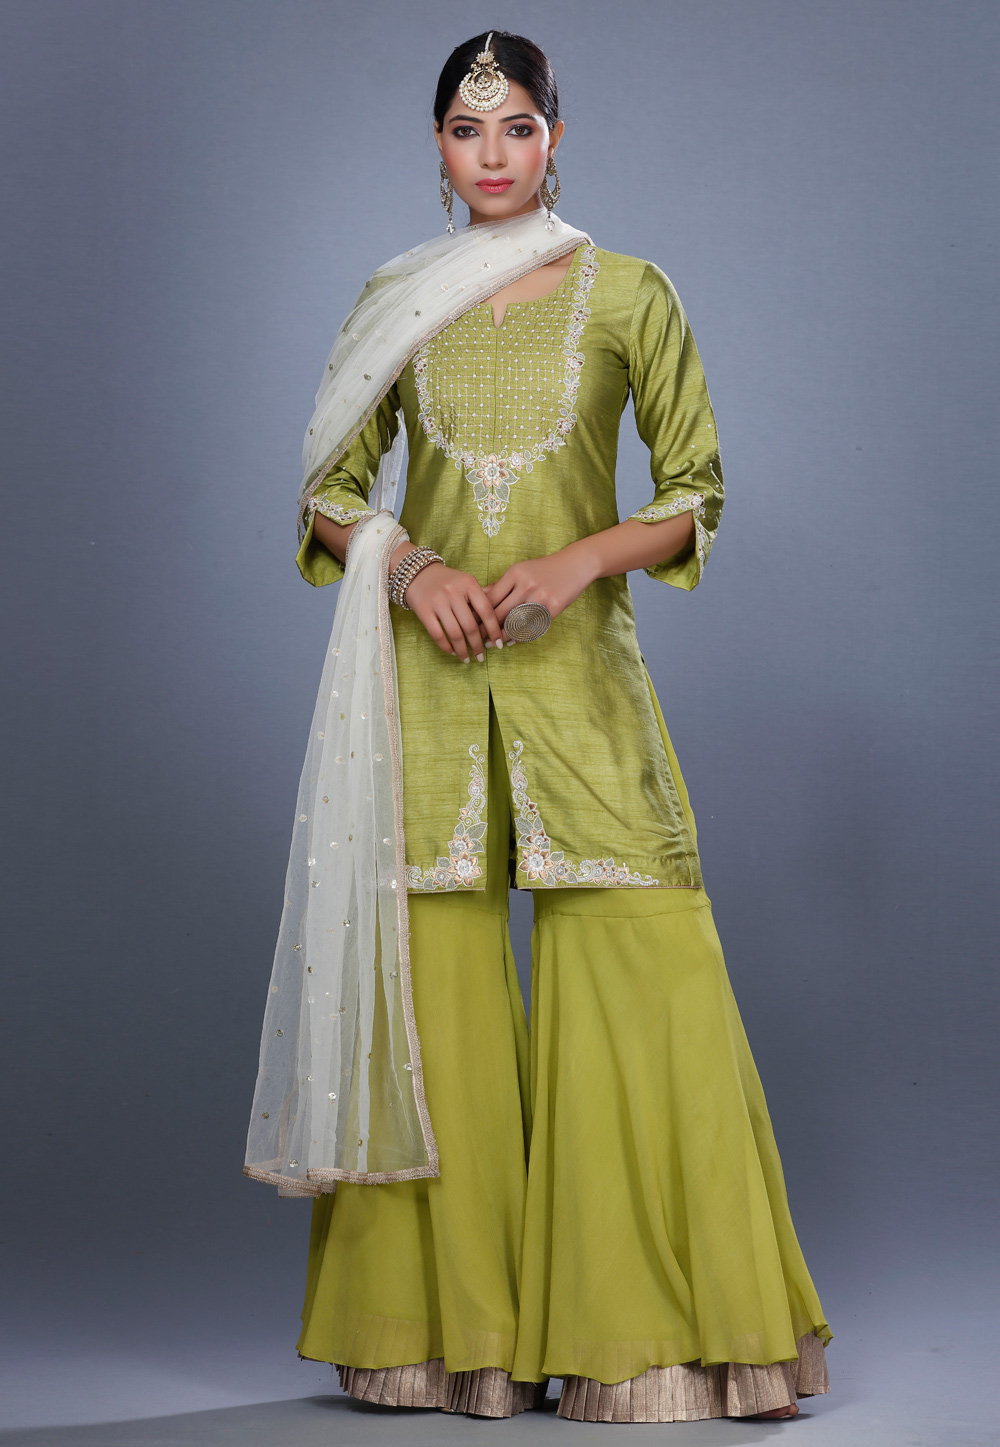 Buy Ethnic Yard Women's Georgette Green Salwar Suit Set at Amazon.in